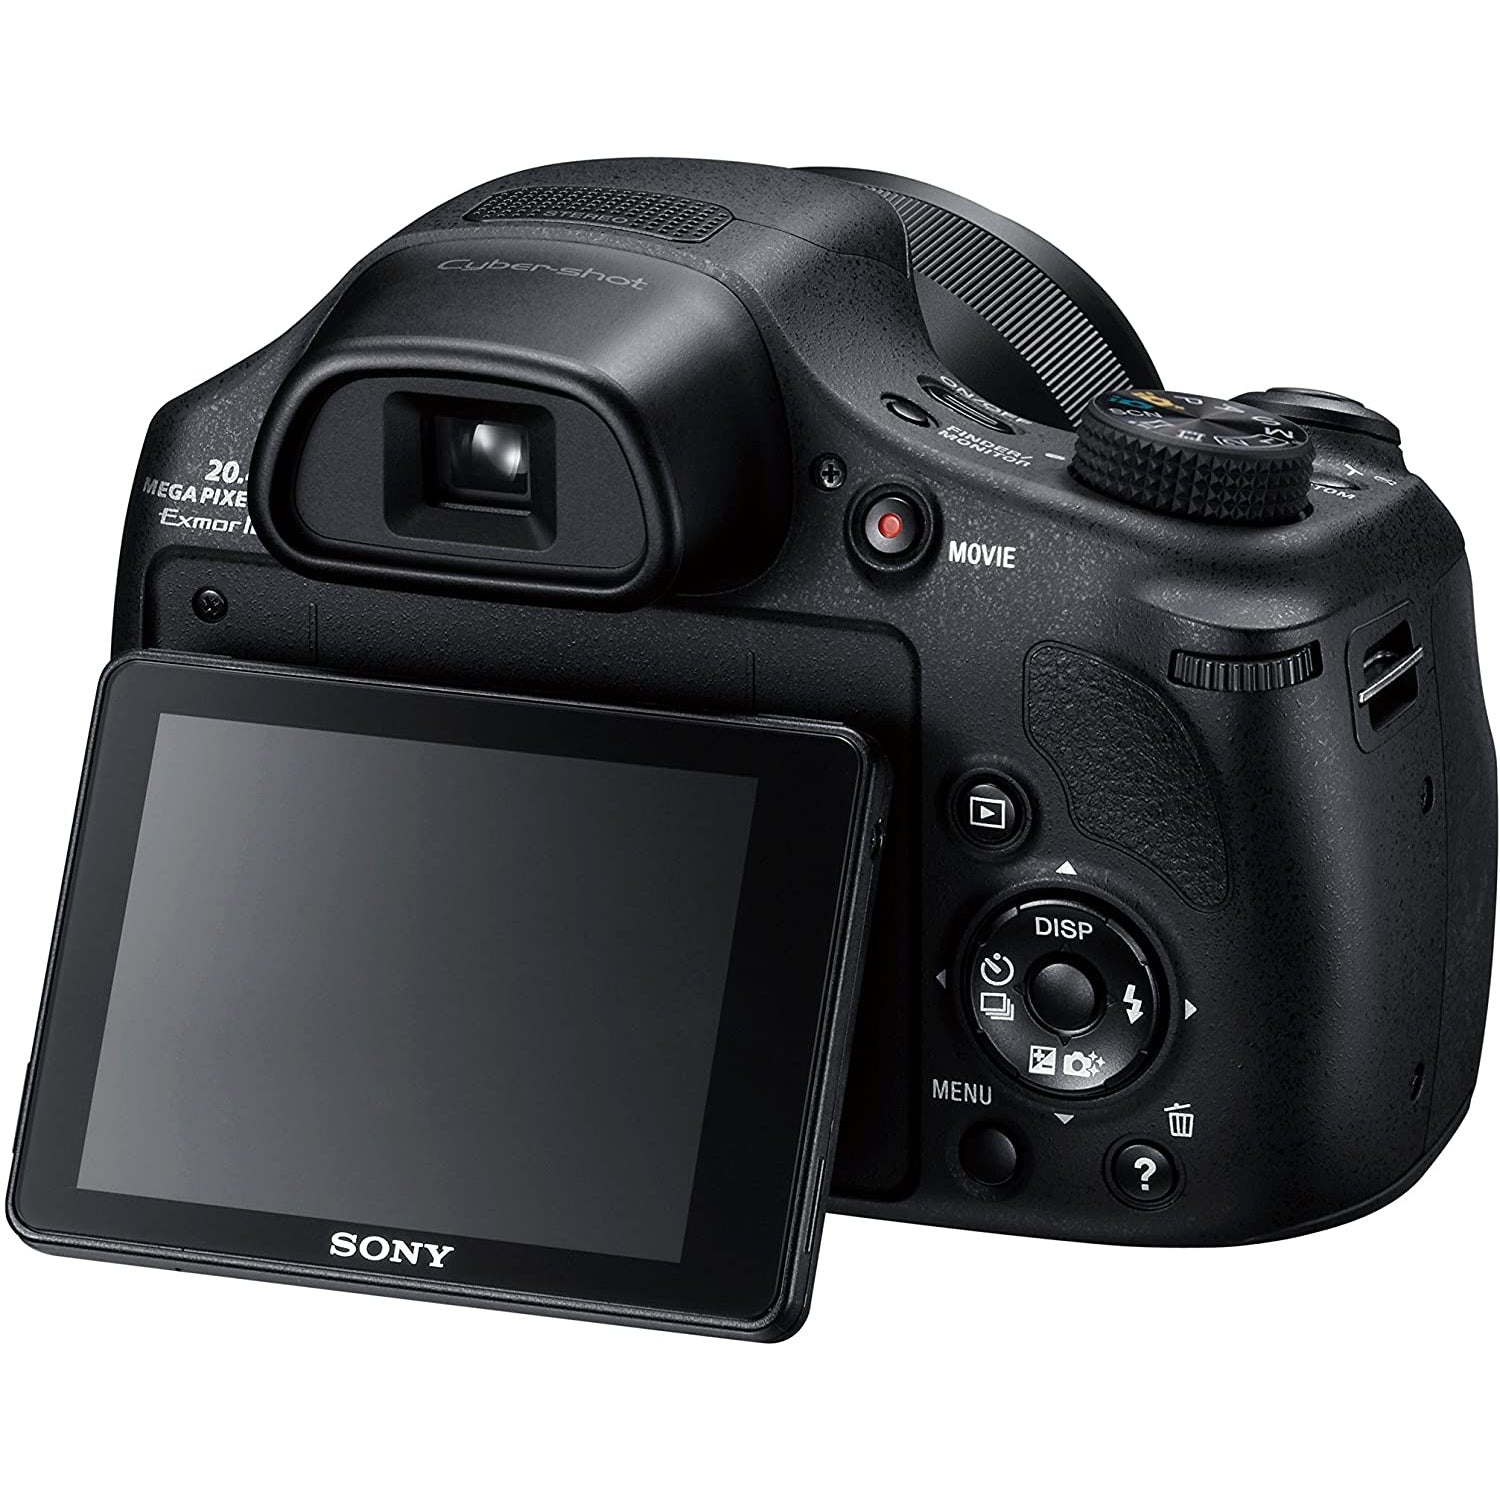 Sony DSC-HX350 Digital Compact Camera - Black